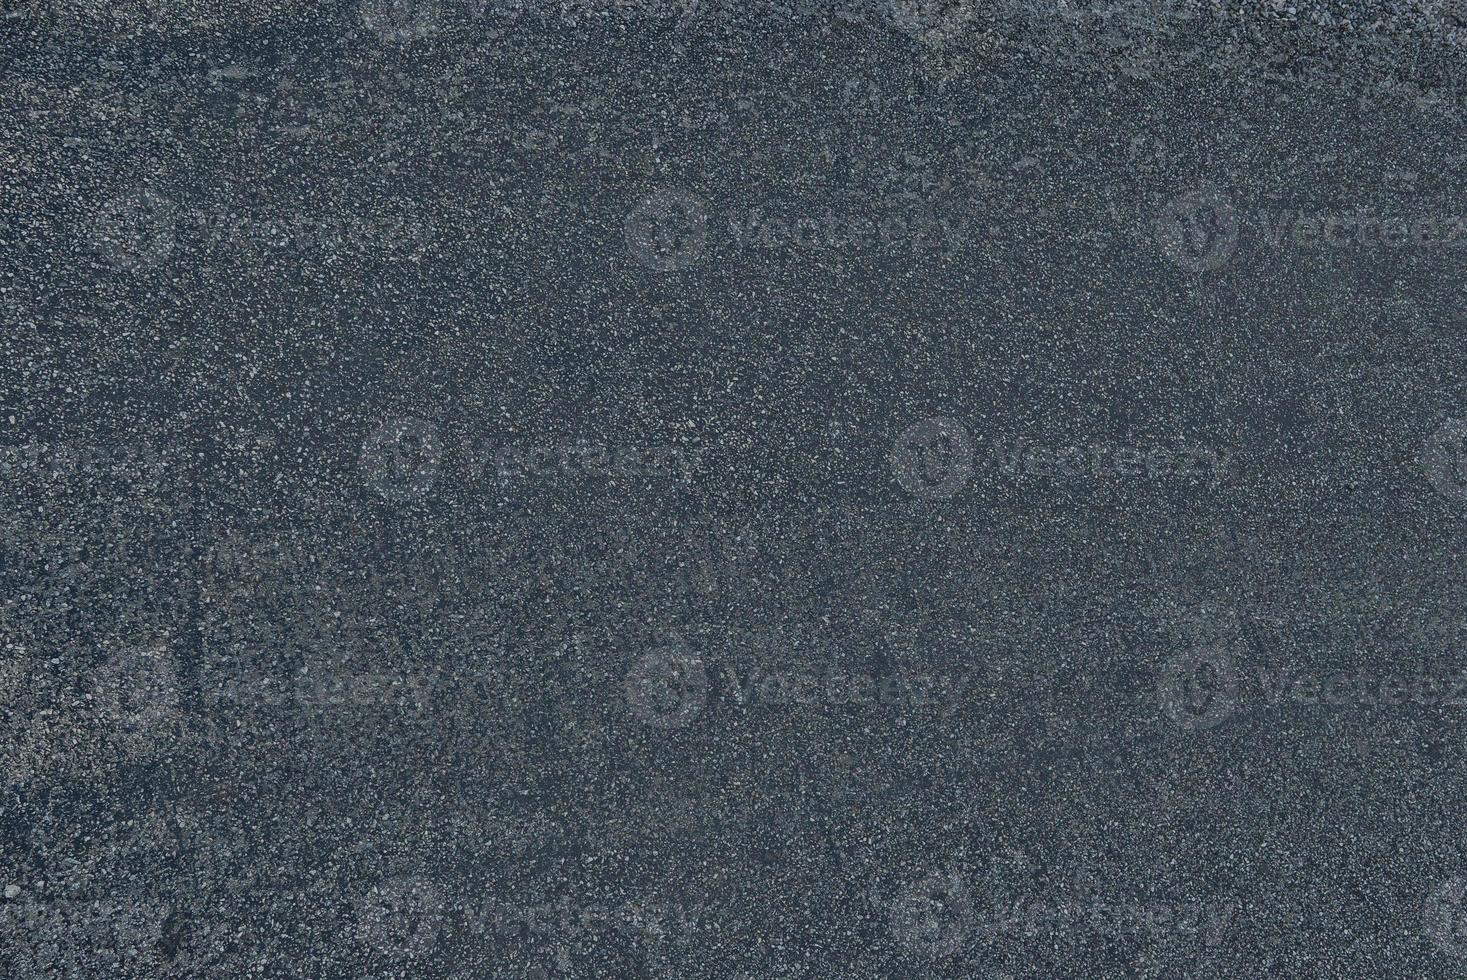 textuur asfalt, naadloze asfalt textuur achtergrond foto